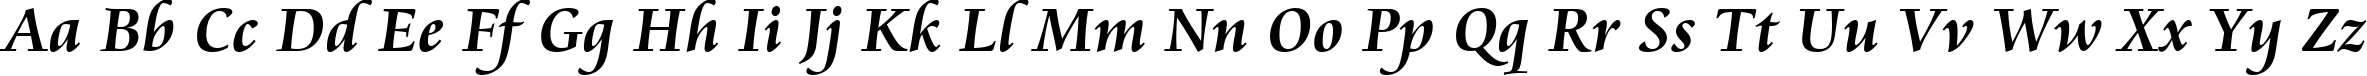 Пример написания английского алфавита шрифтом Cataneo Bold BT